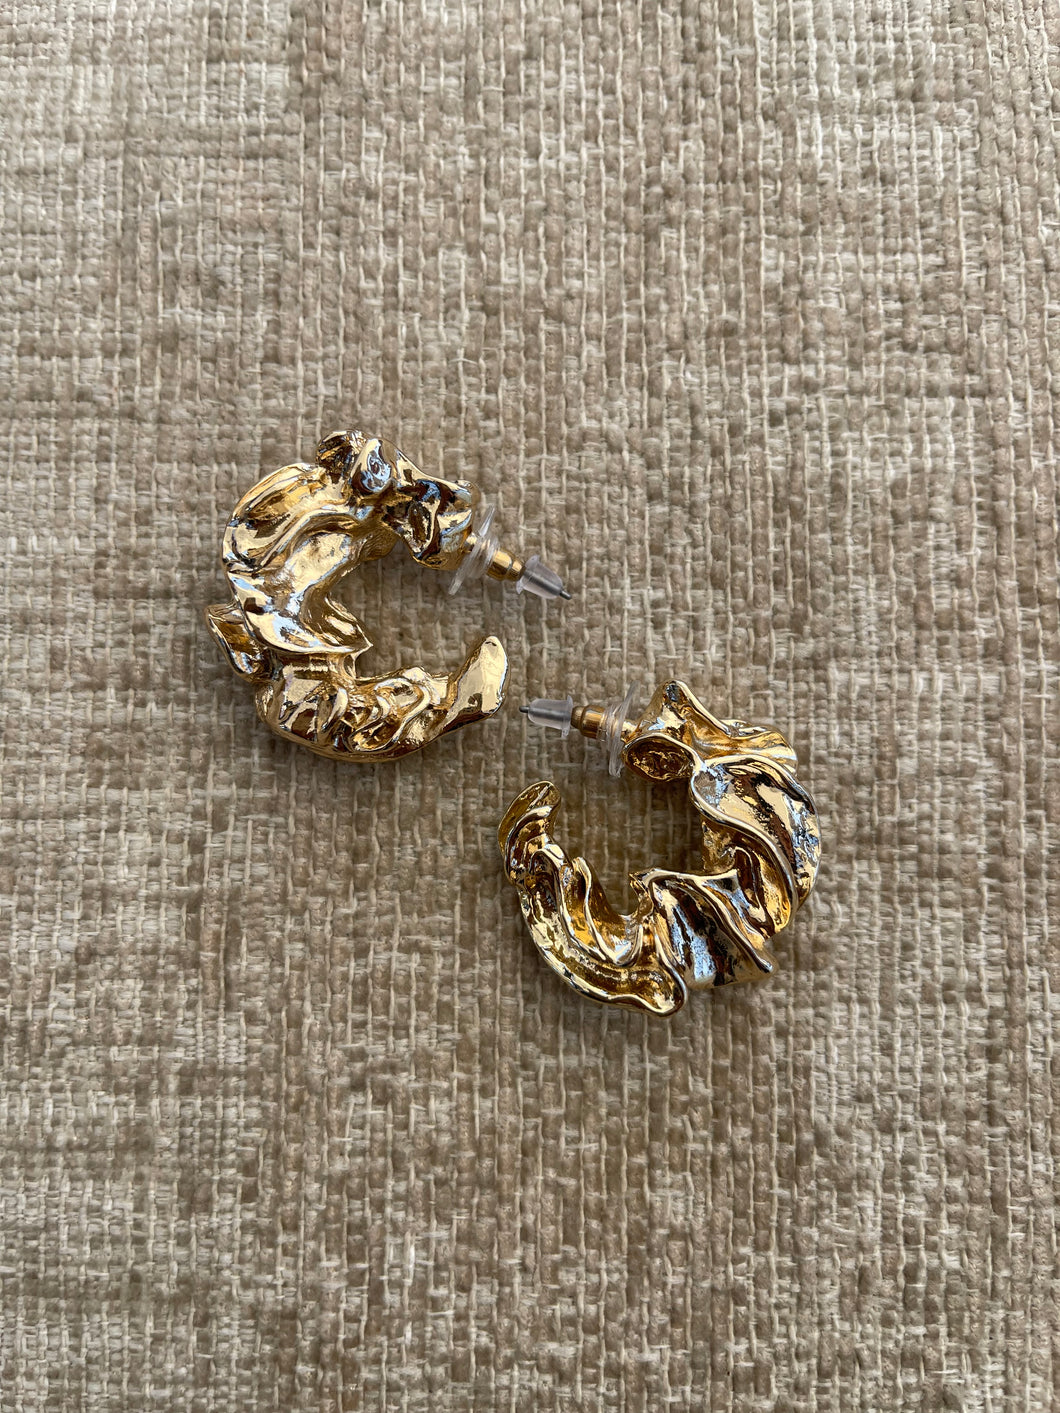 Chunky gold earrings